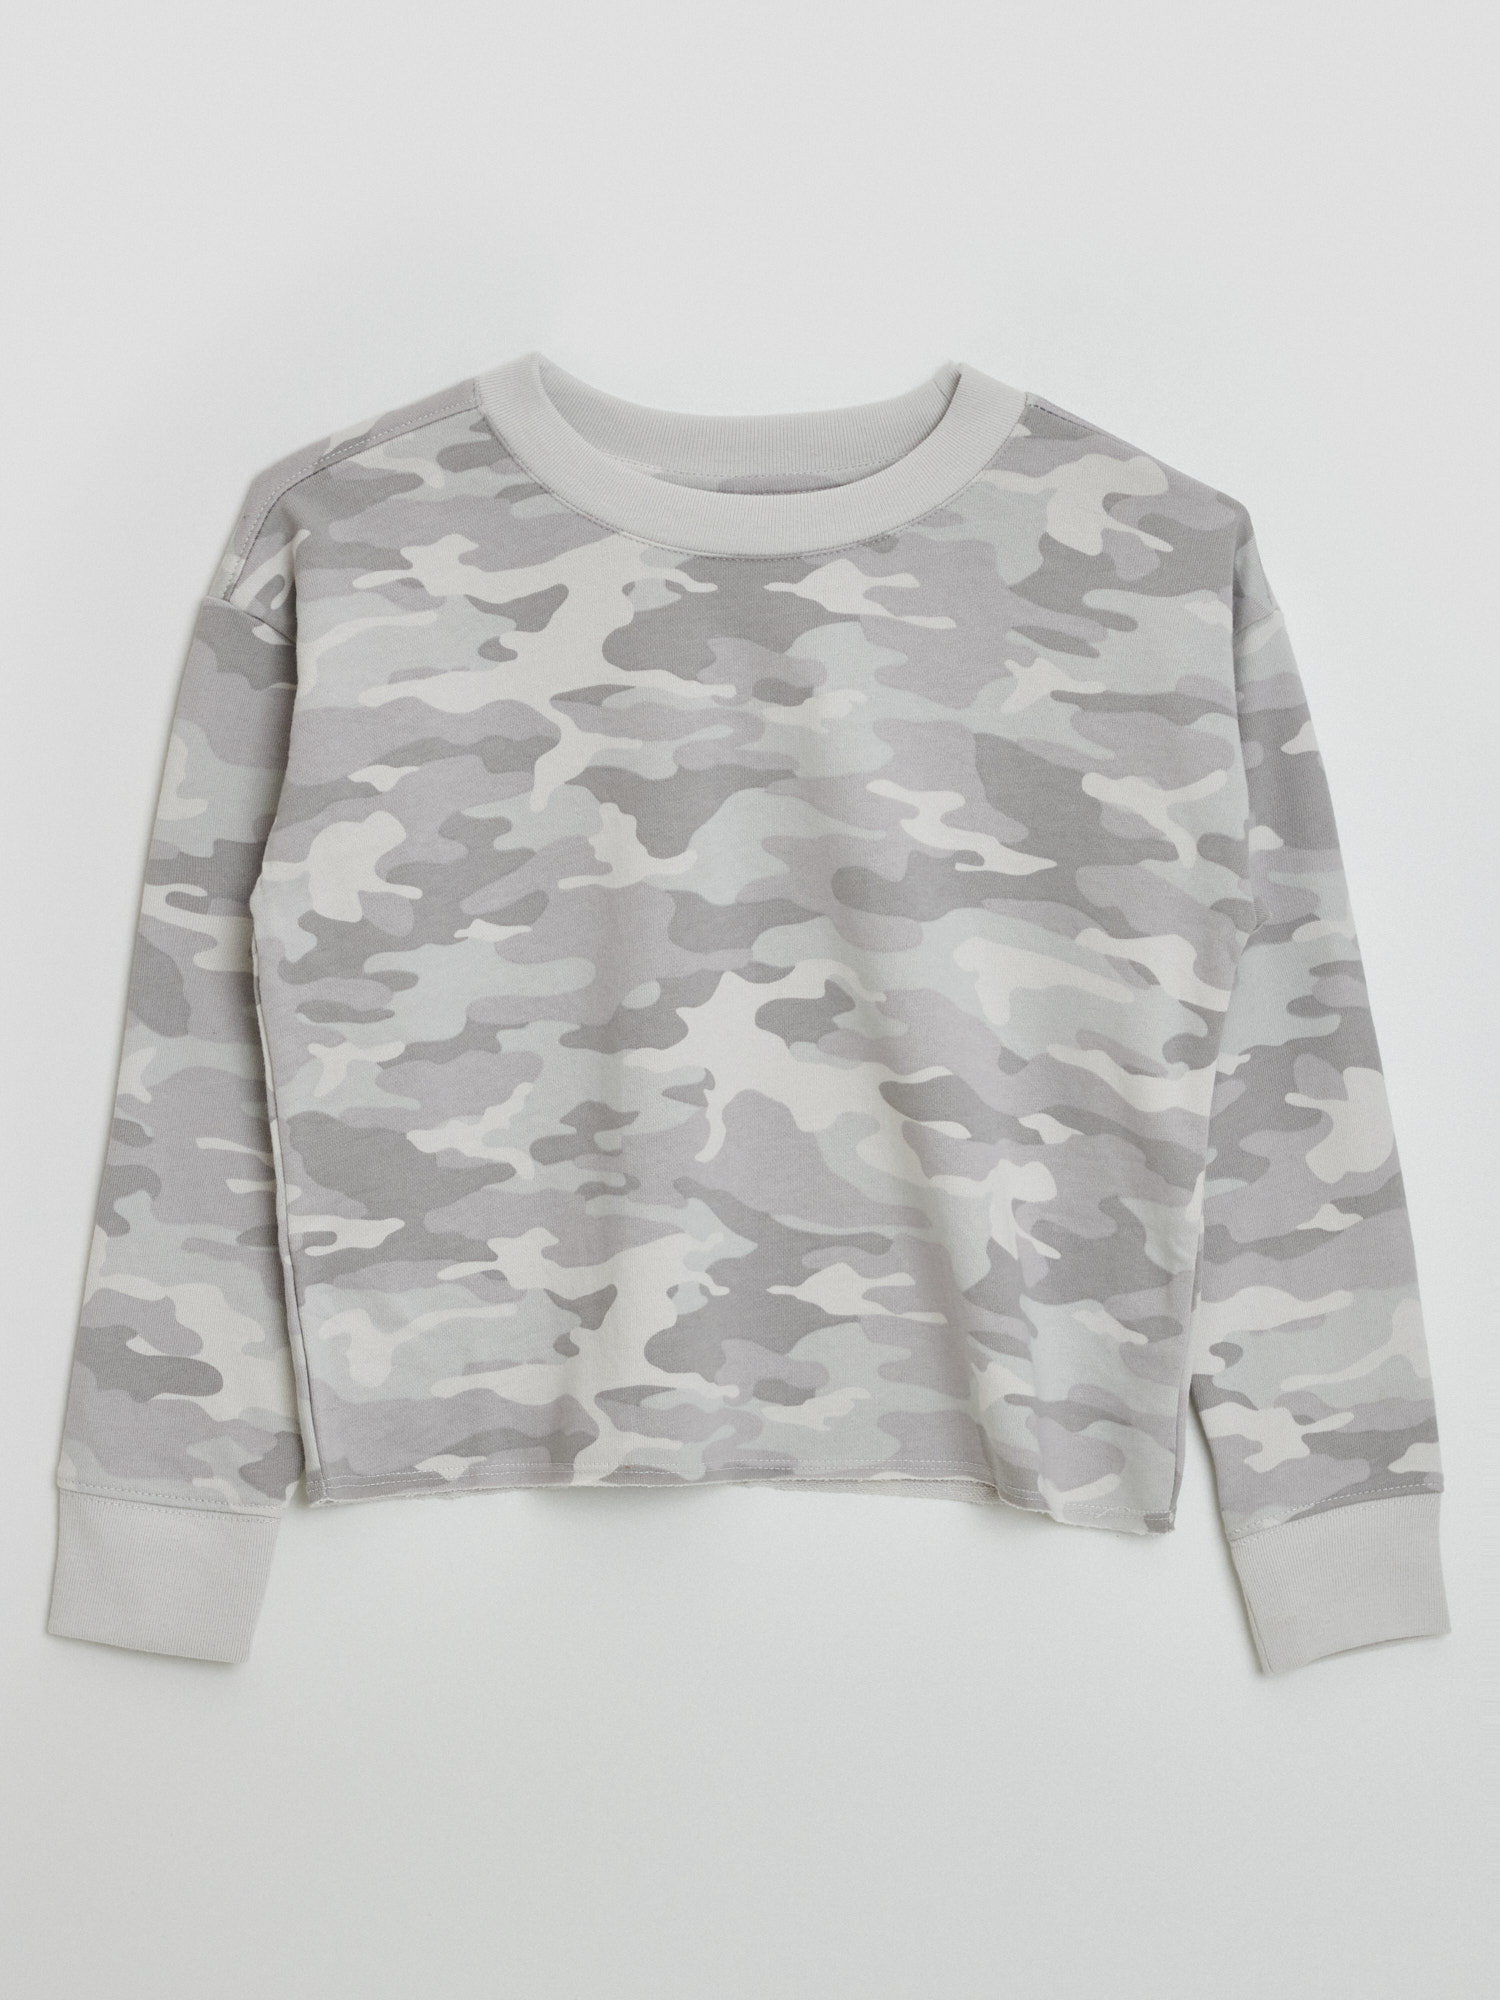 GAP Kids Sweatshirt With Camouflage Pattern - Girls